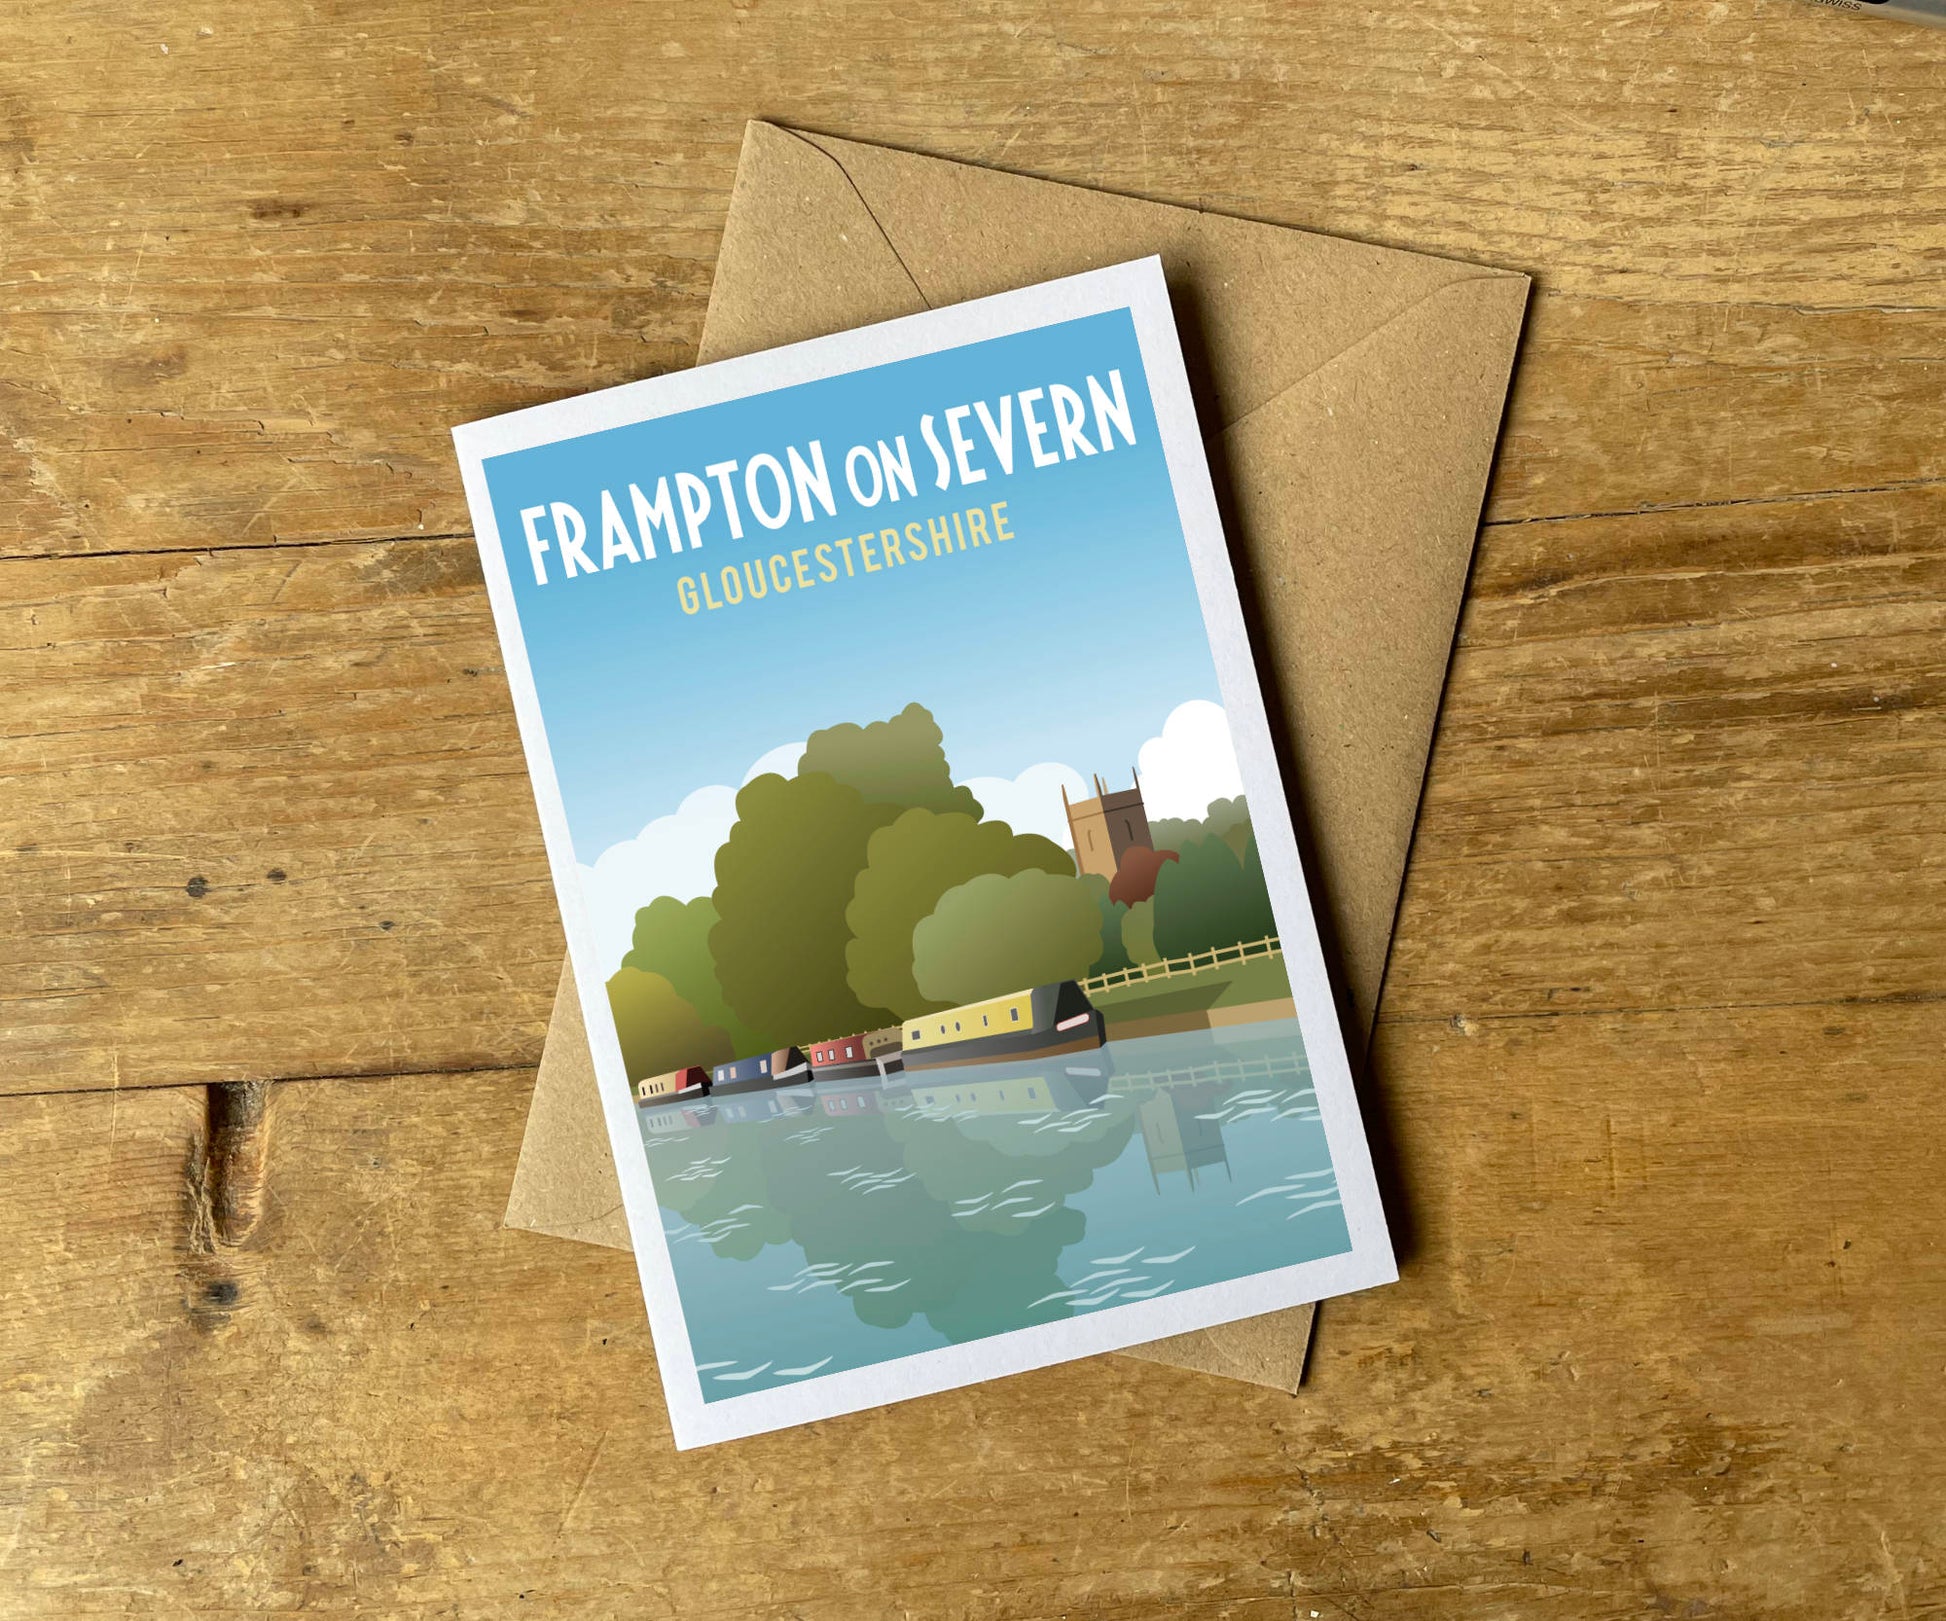 Frampton on Severn Greeting Card vintage style design